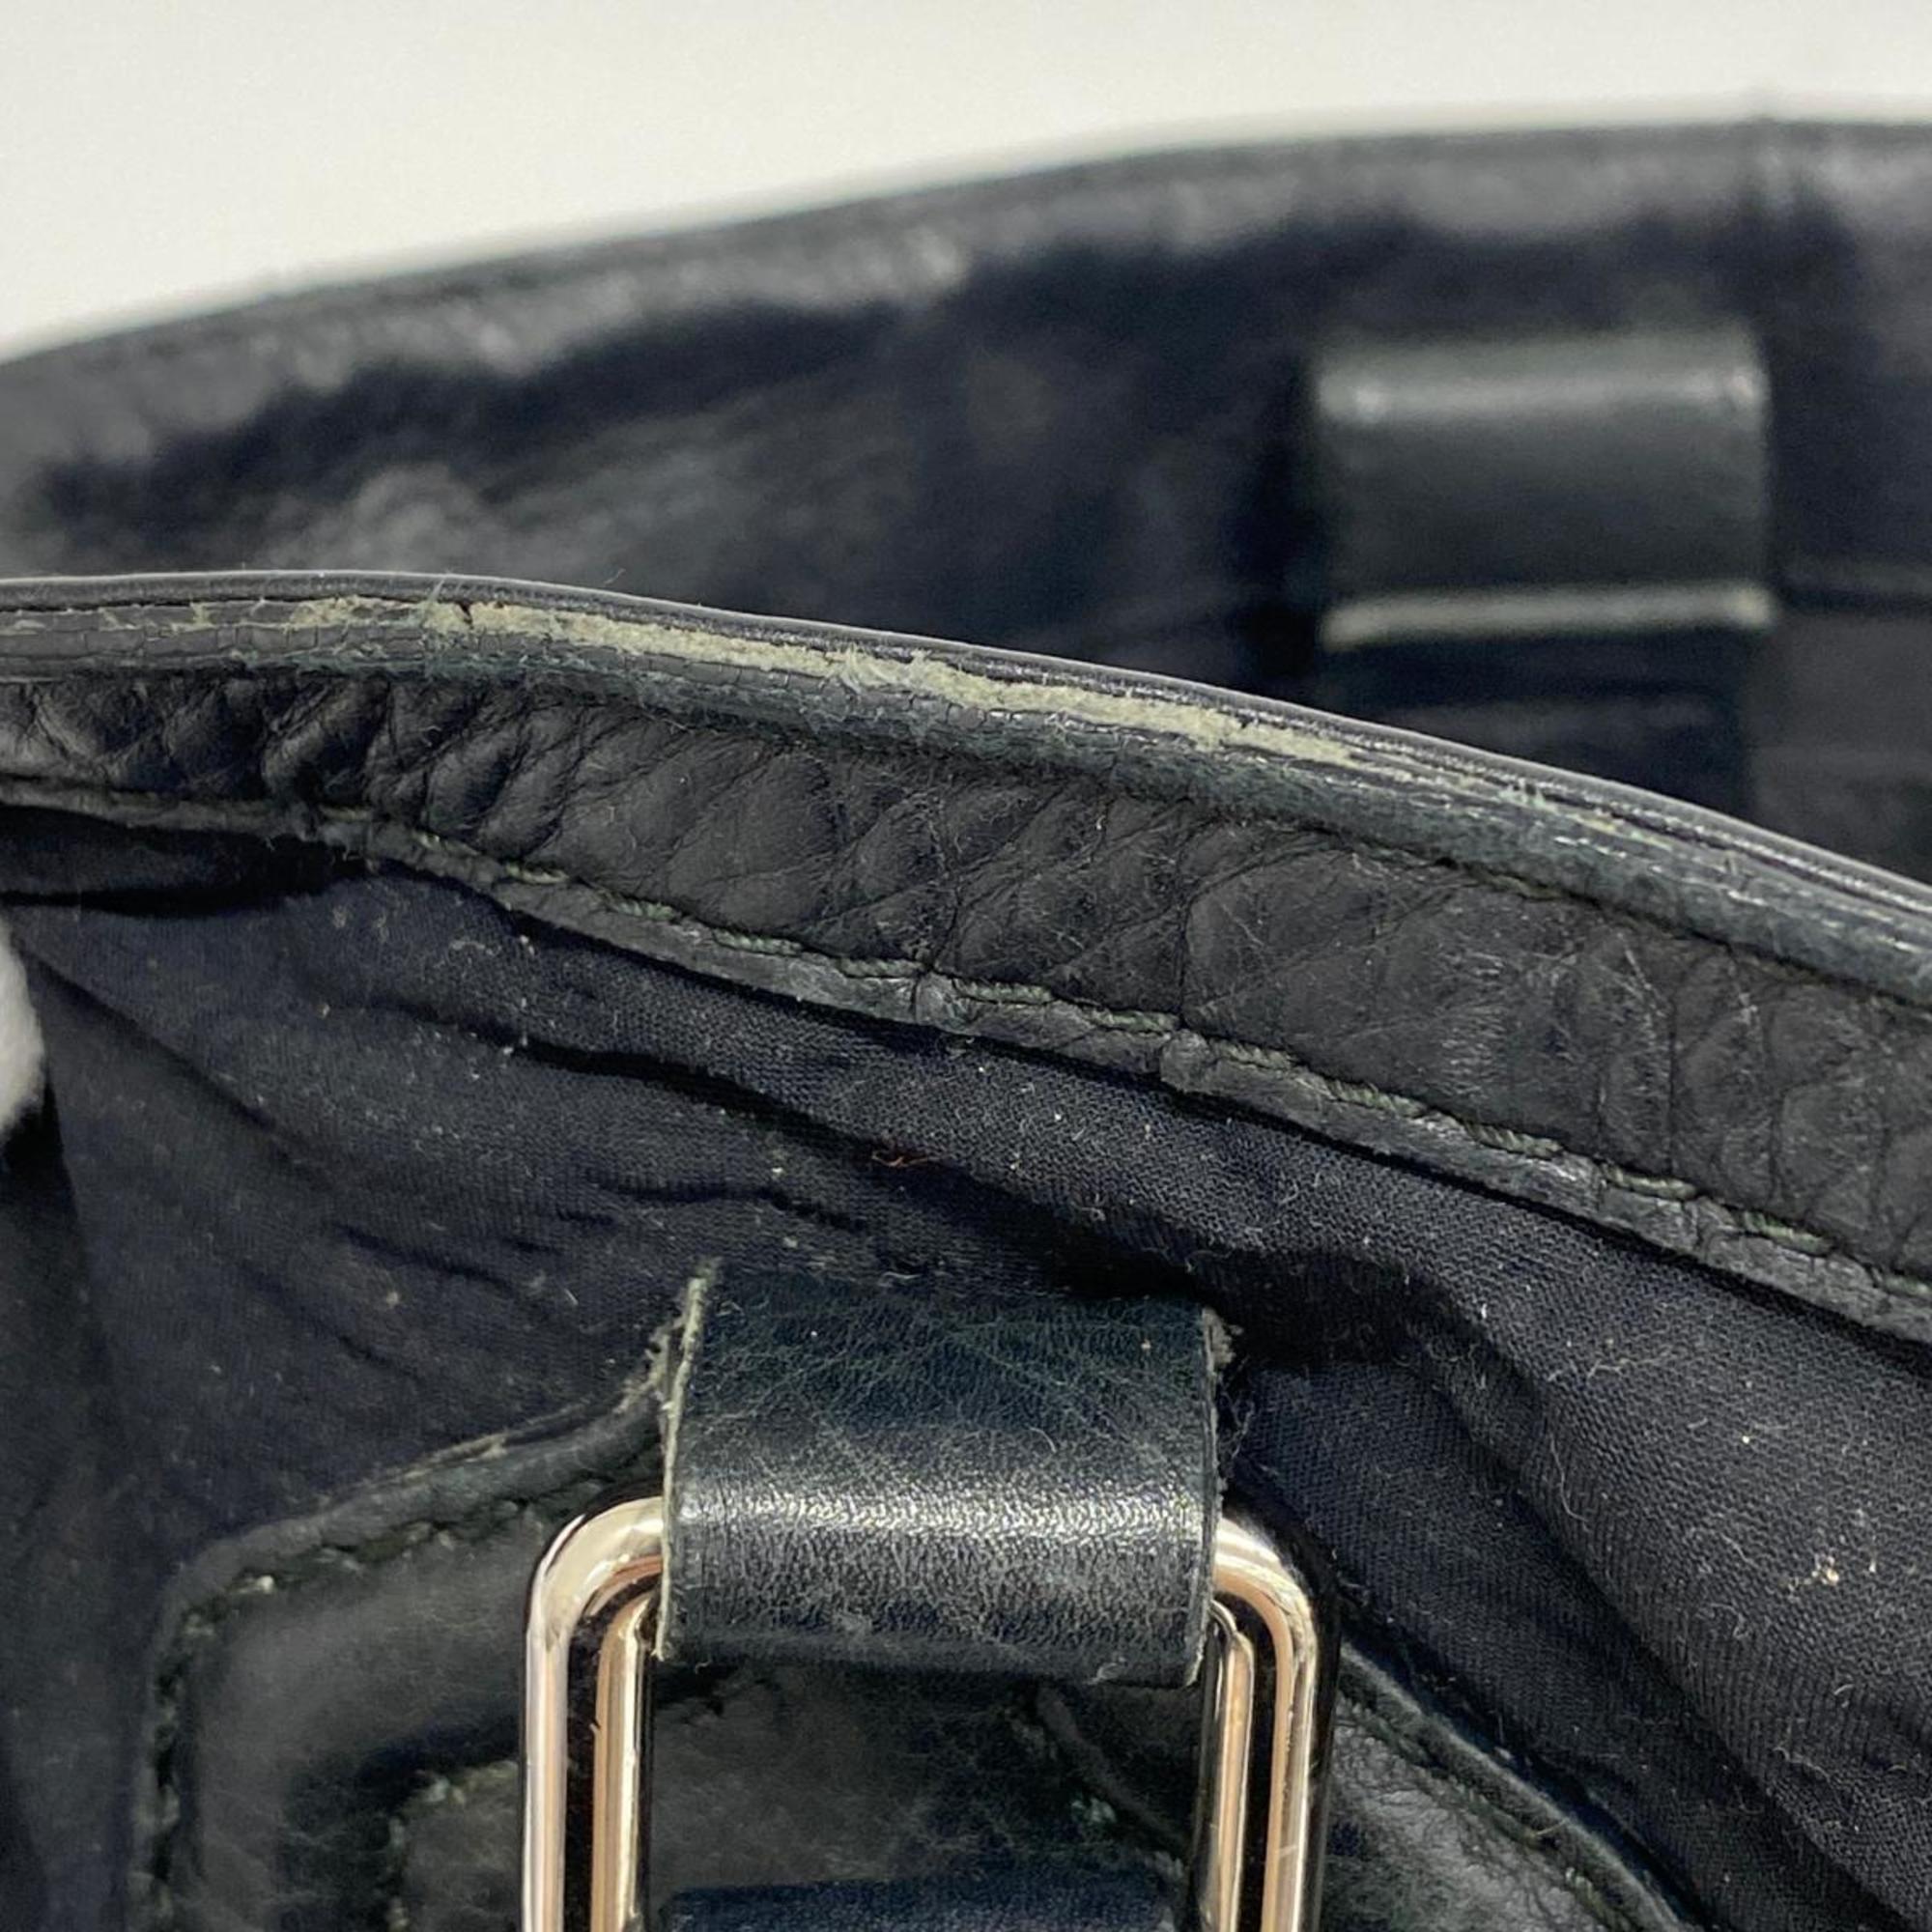 Gucci Tote Bag Neoprene 241101 Leather Black Women's